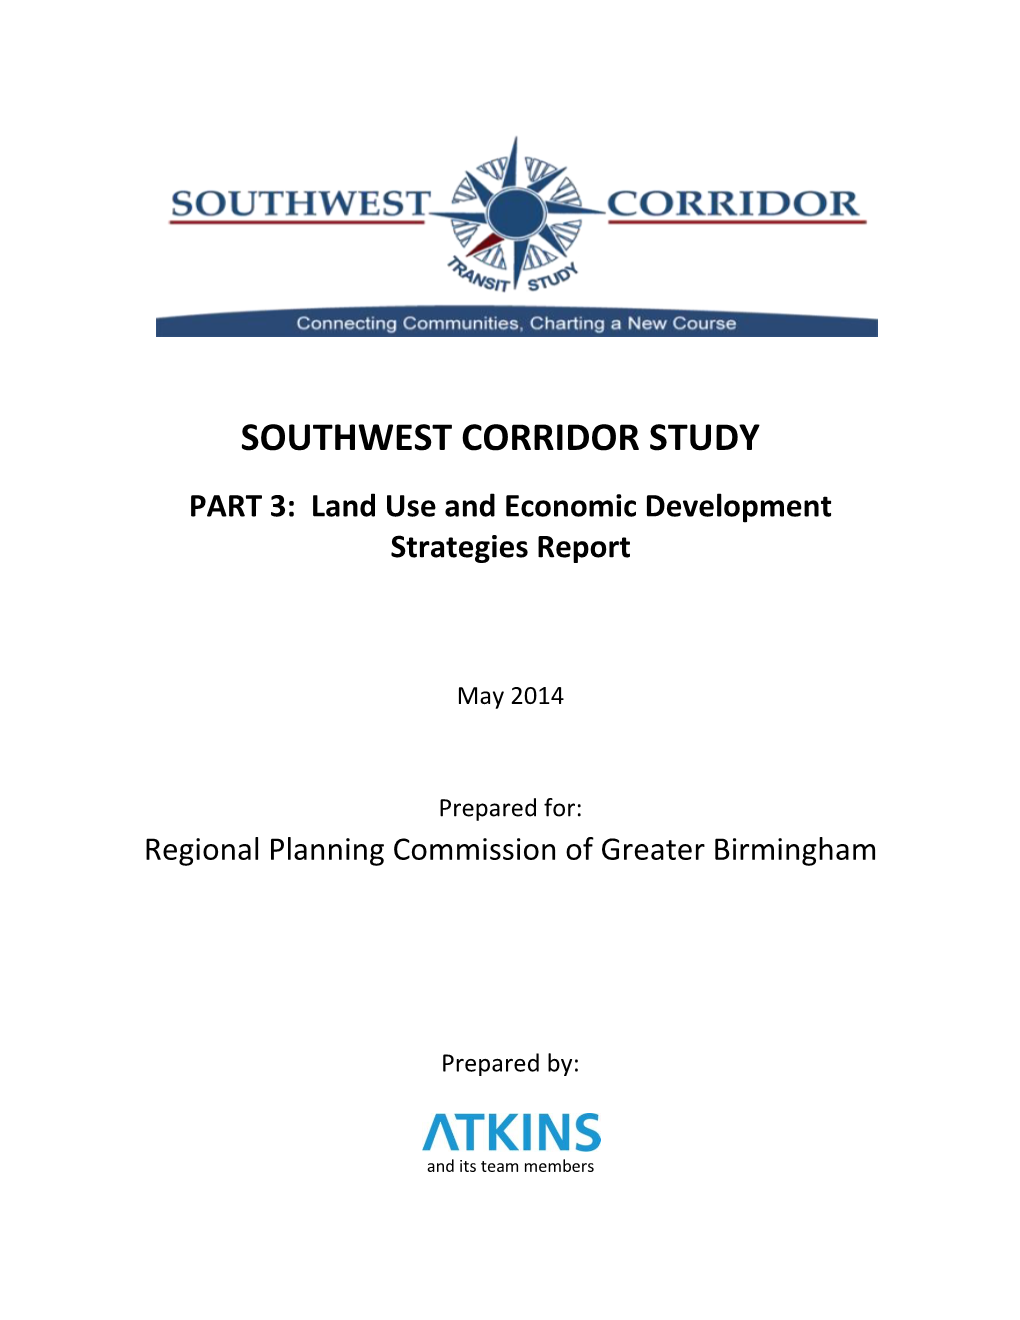 SOUTHWEST CORRIDOR STUDY PART 3: Land Use and Economic Development Strategies Report